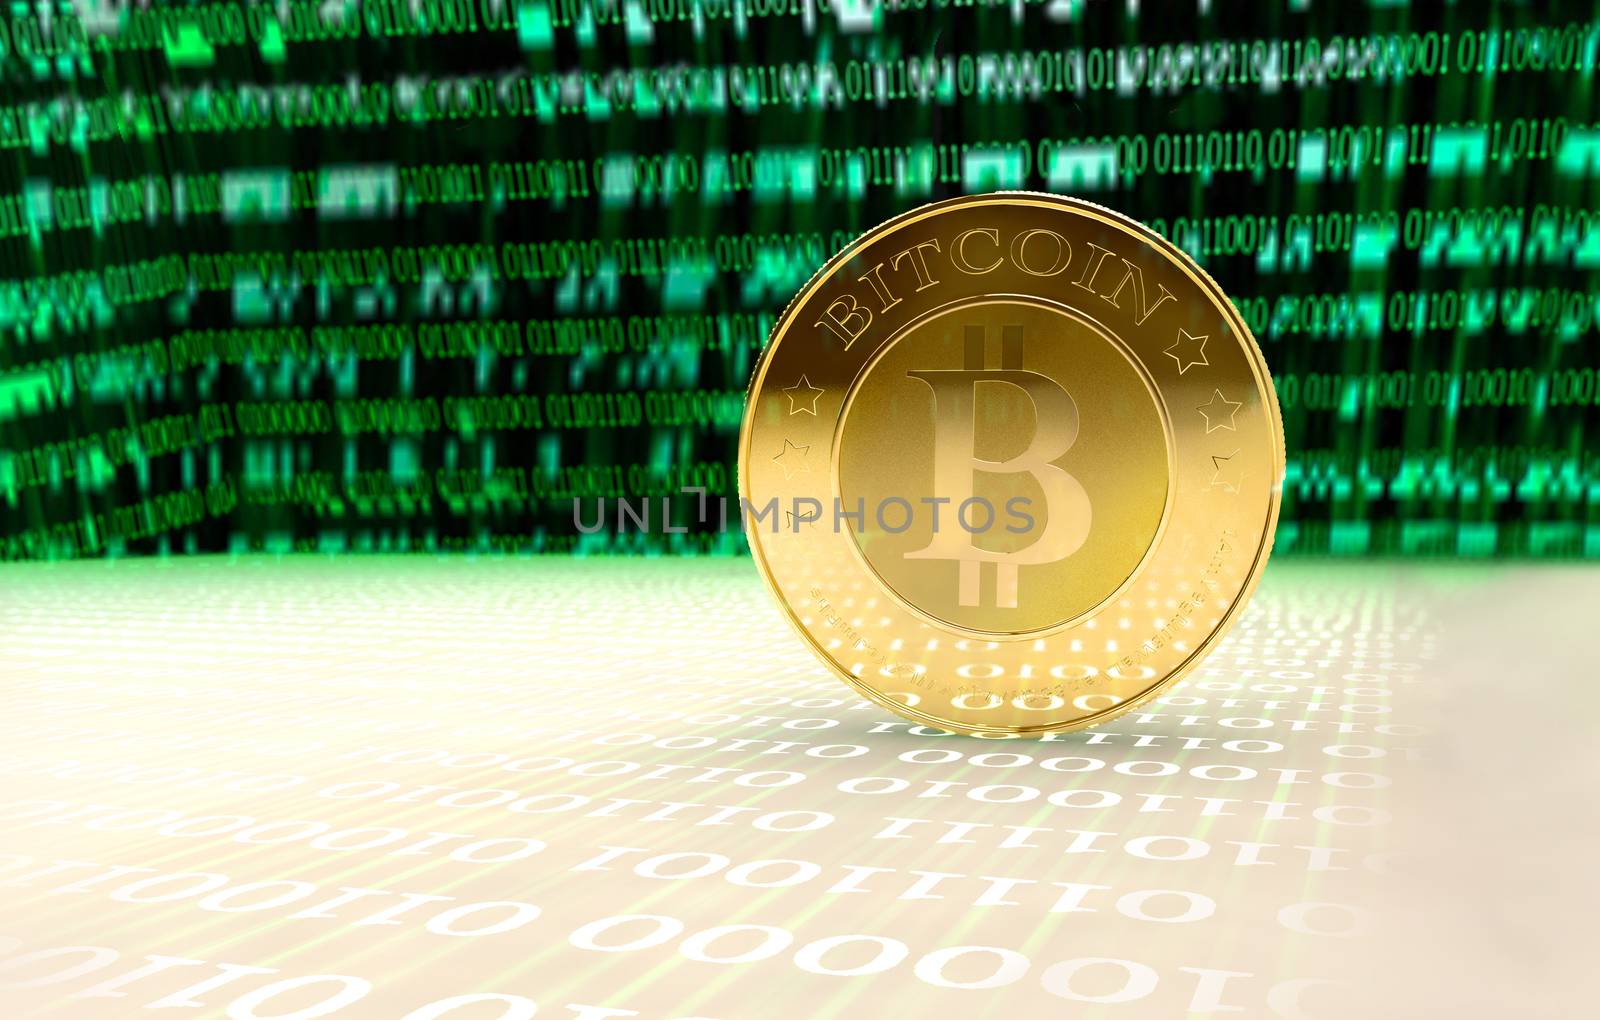 lots of bitcoins - bit coin BTC the new virtual money